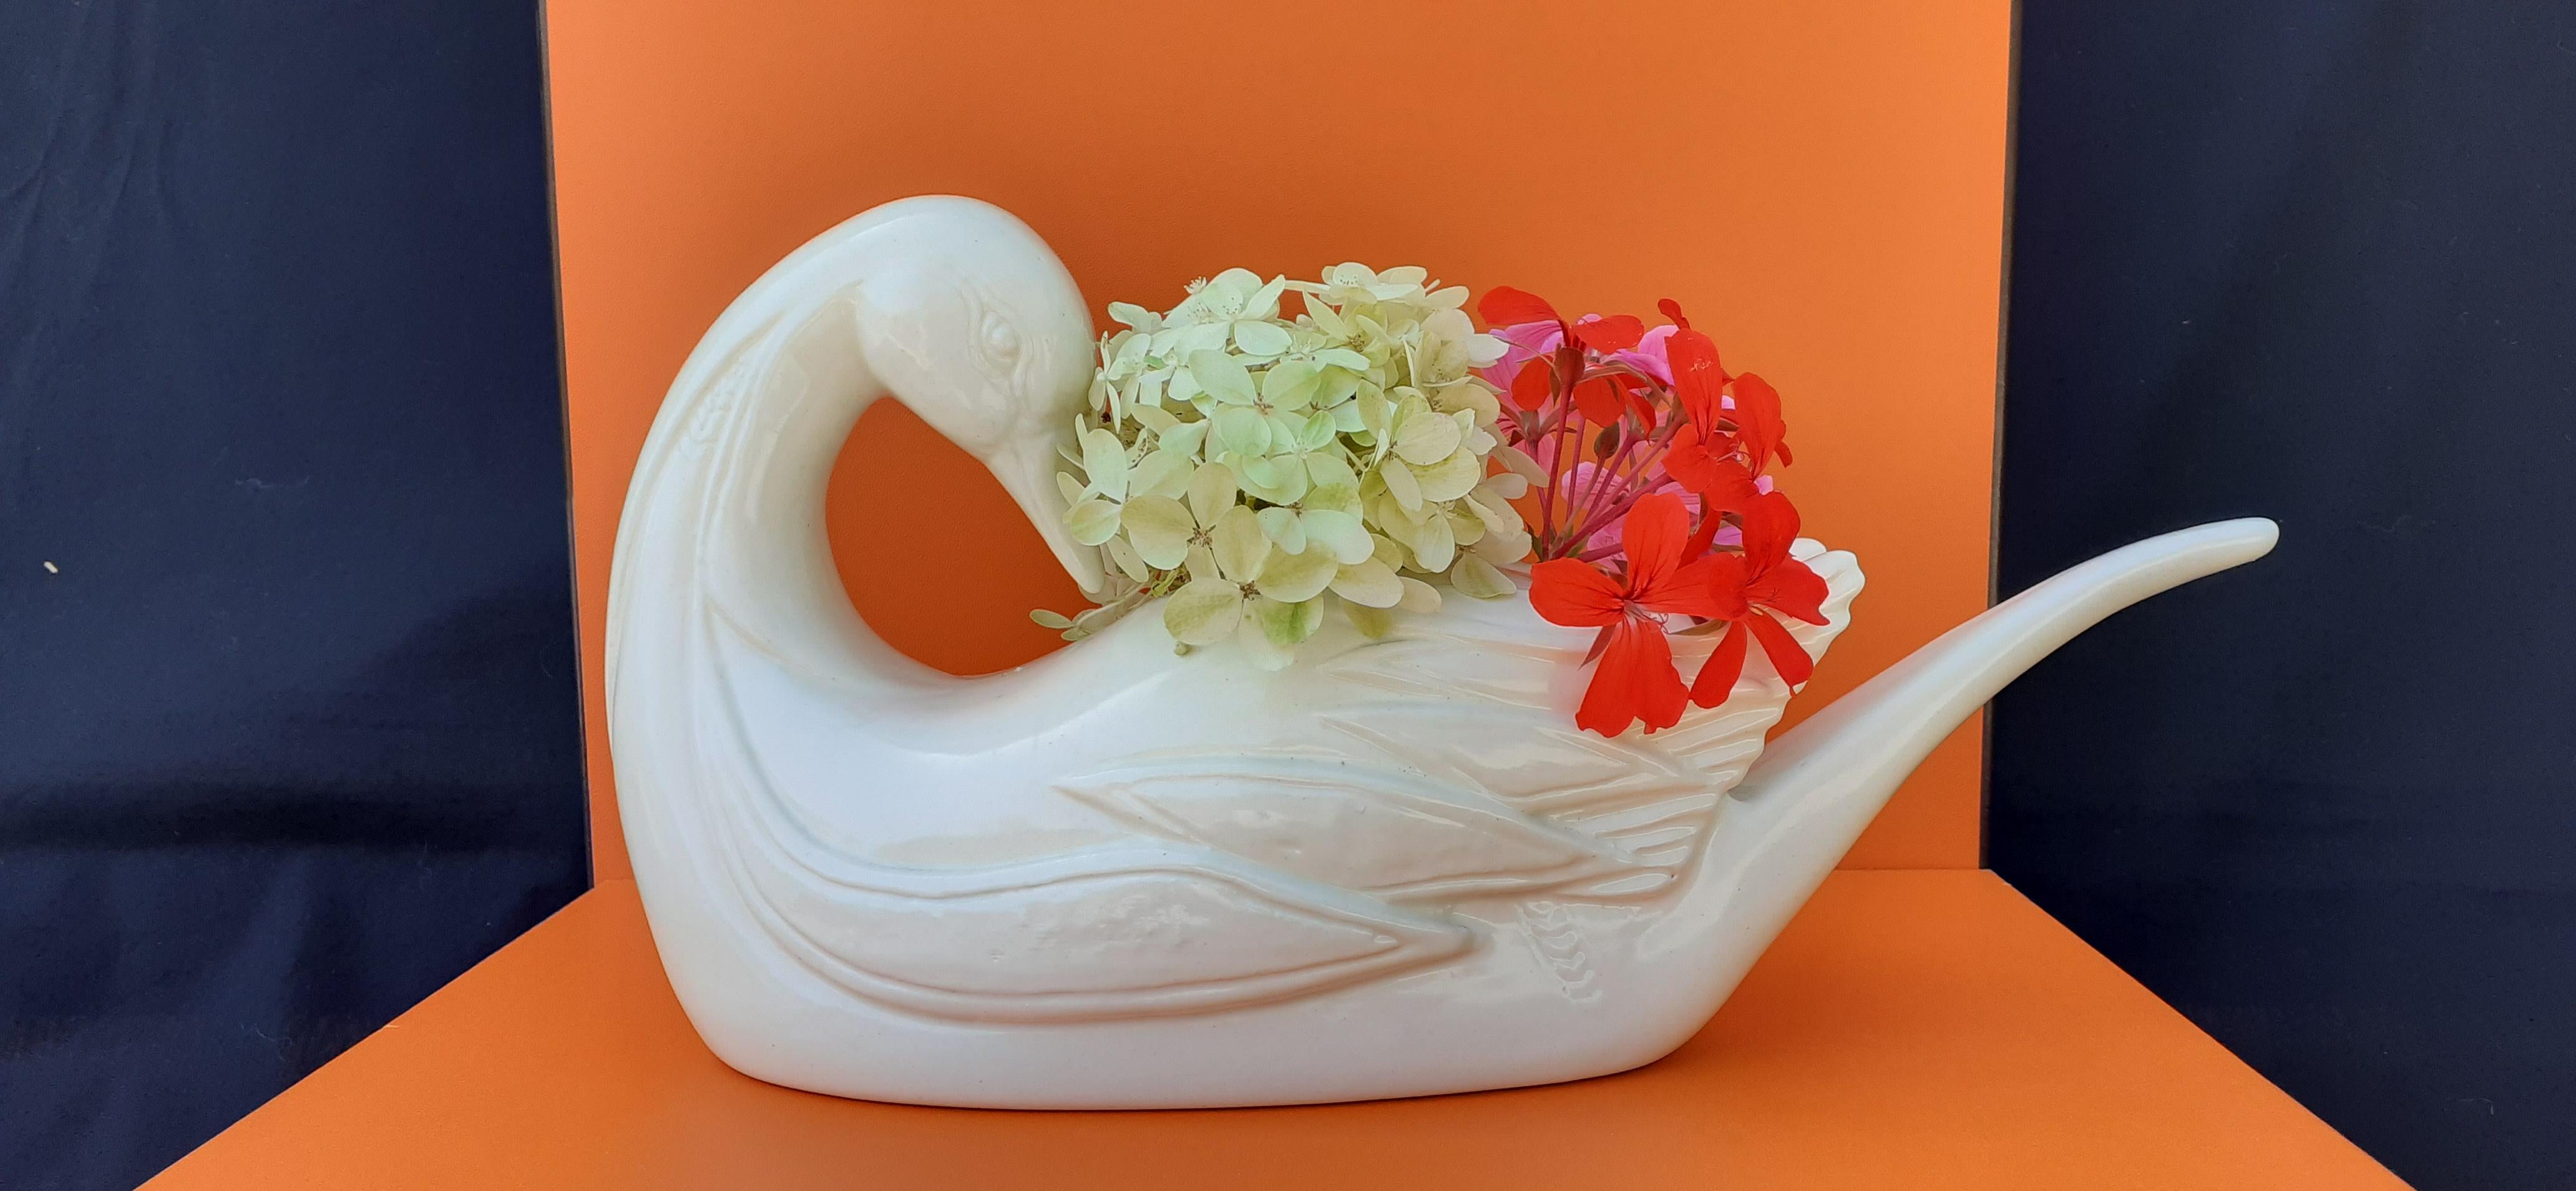 Exceptional Hermès Centerpiece Vase Ceramic Duck From La Mare aux Canards RARE For Sale 7